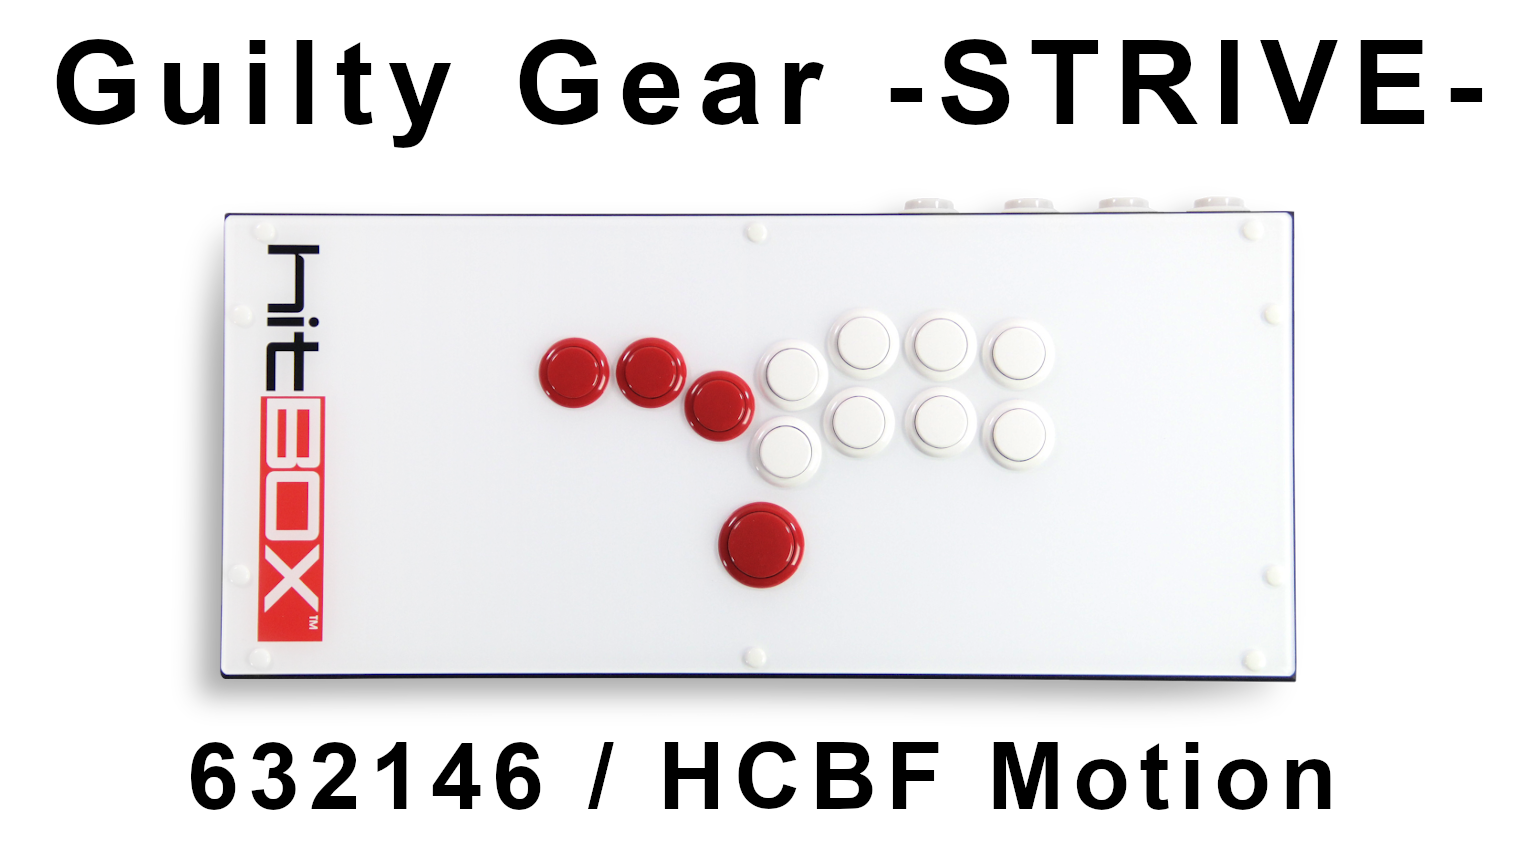 Guilty Gear -STRIVE- on Hit Box - 632146 / HCBF Motions